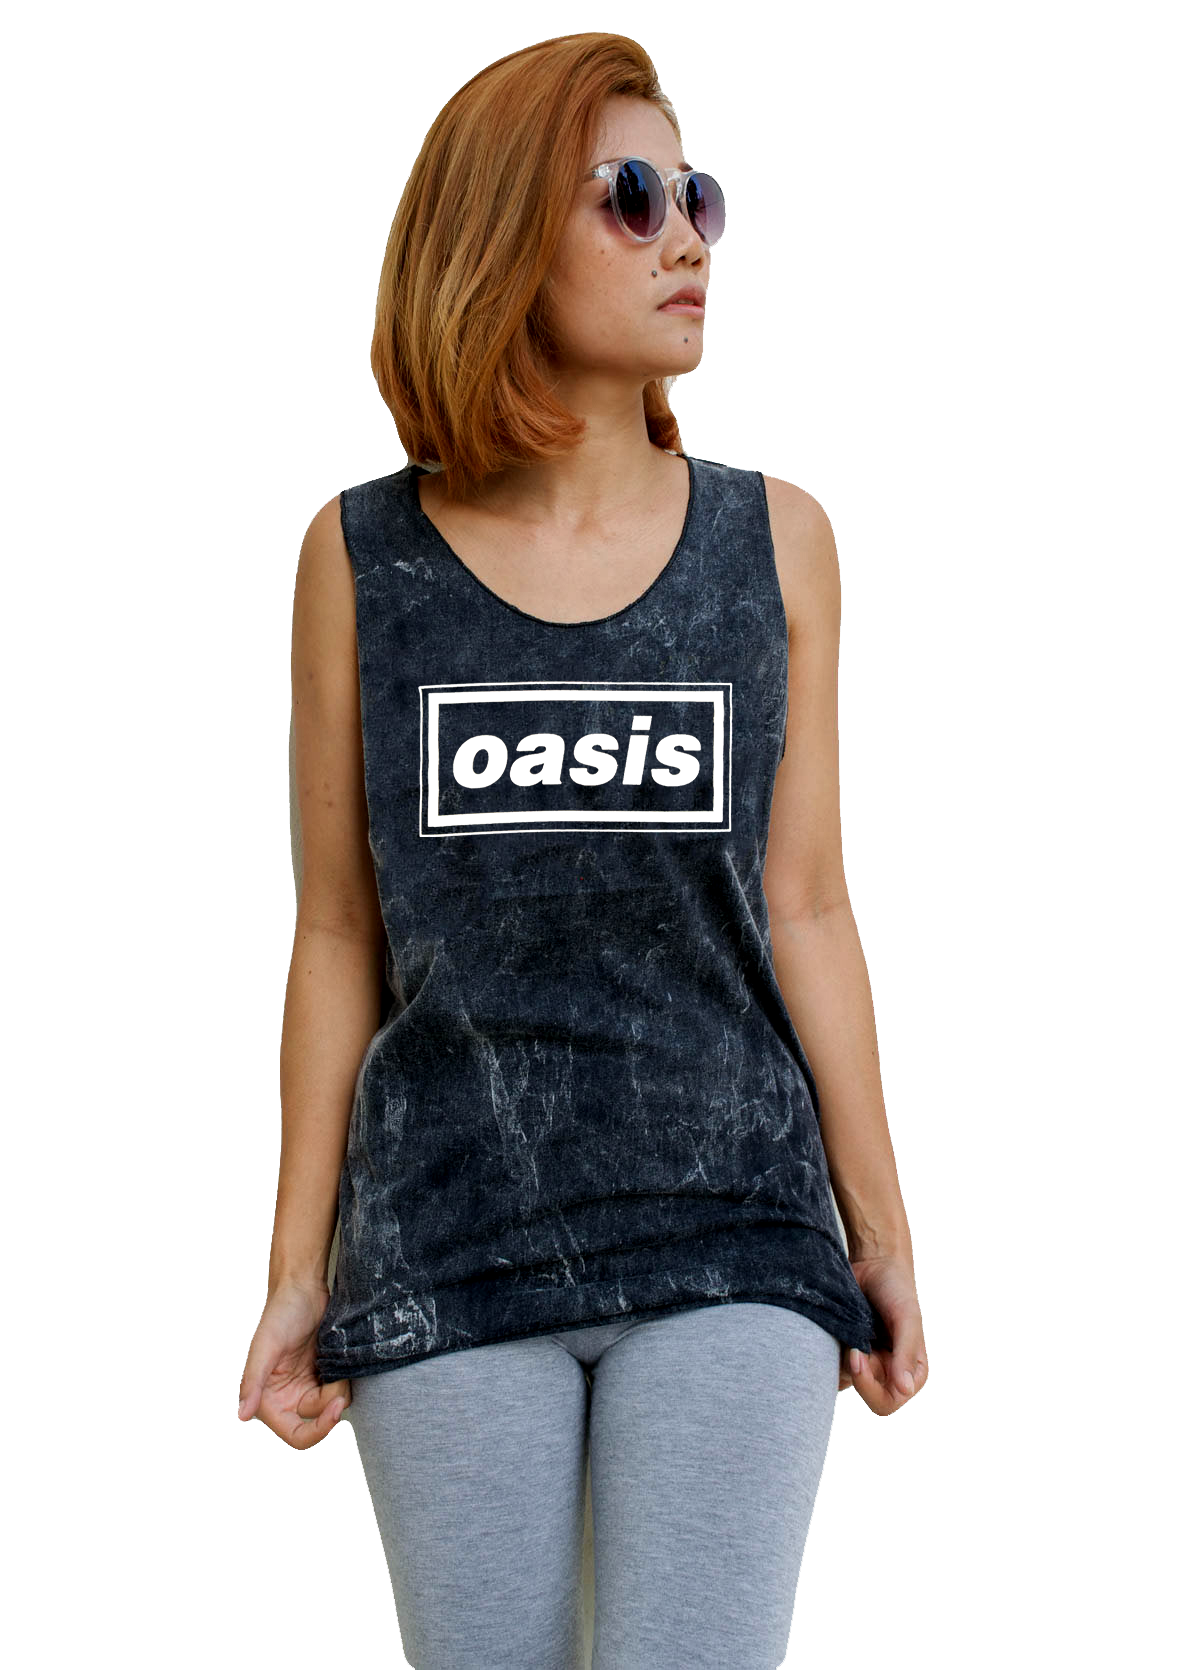 Unisex Oasis Tank-Top Singlet vest Sleeveless T-shirt